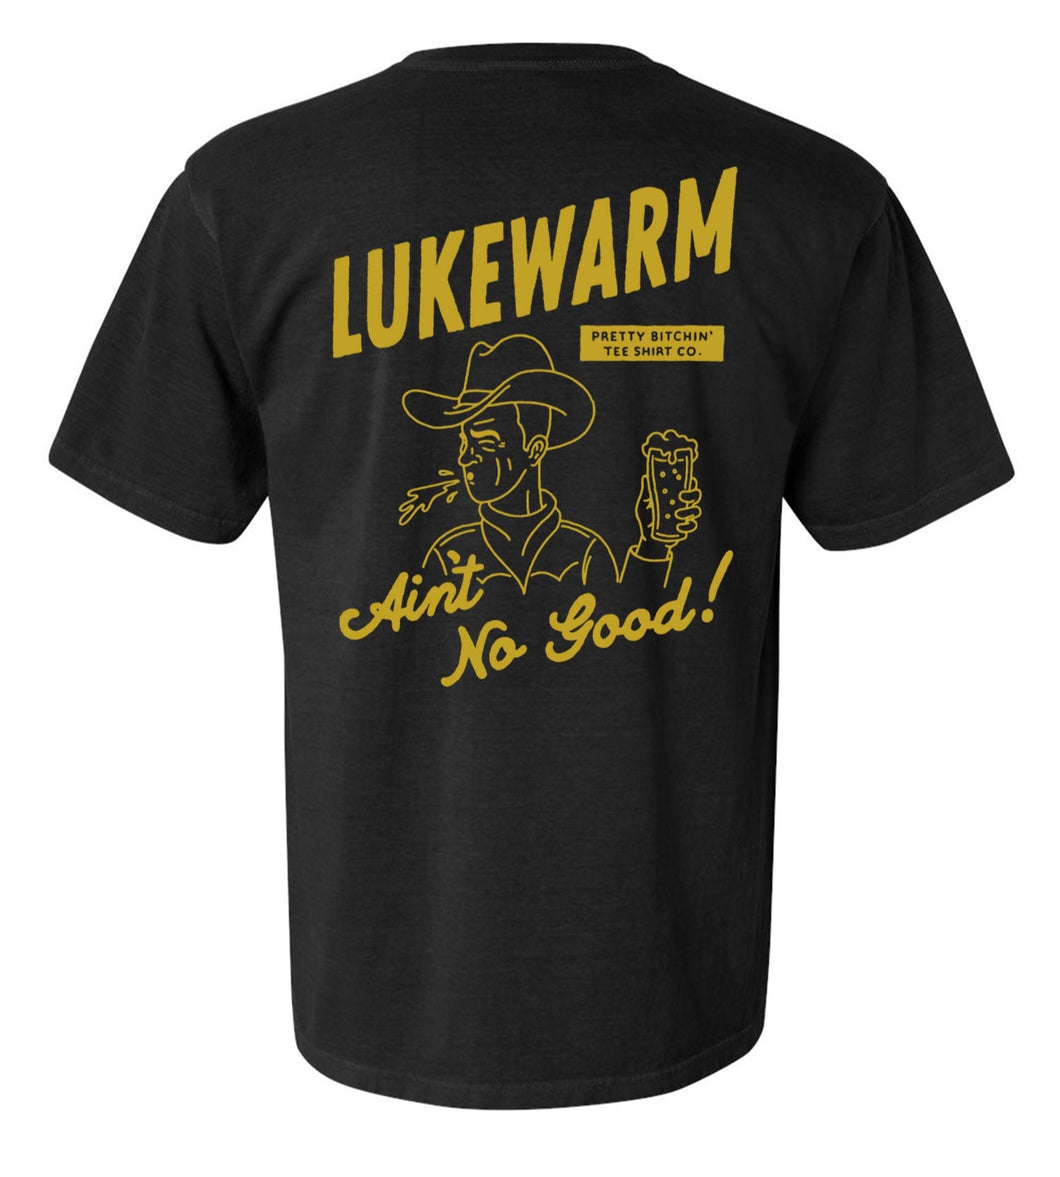 The Lukewarm Tee